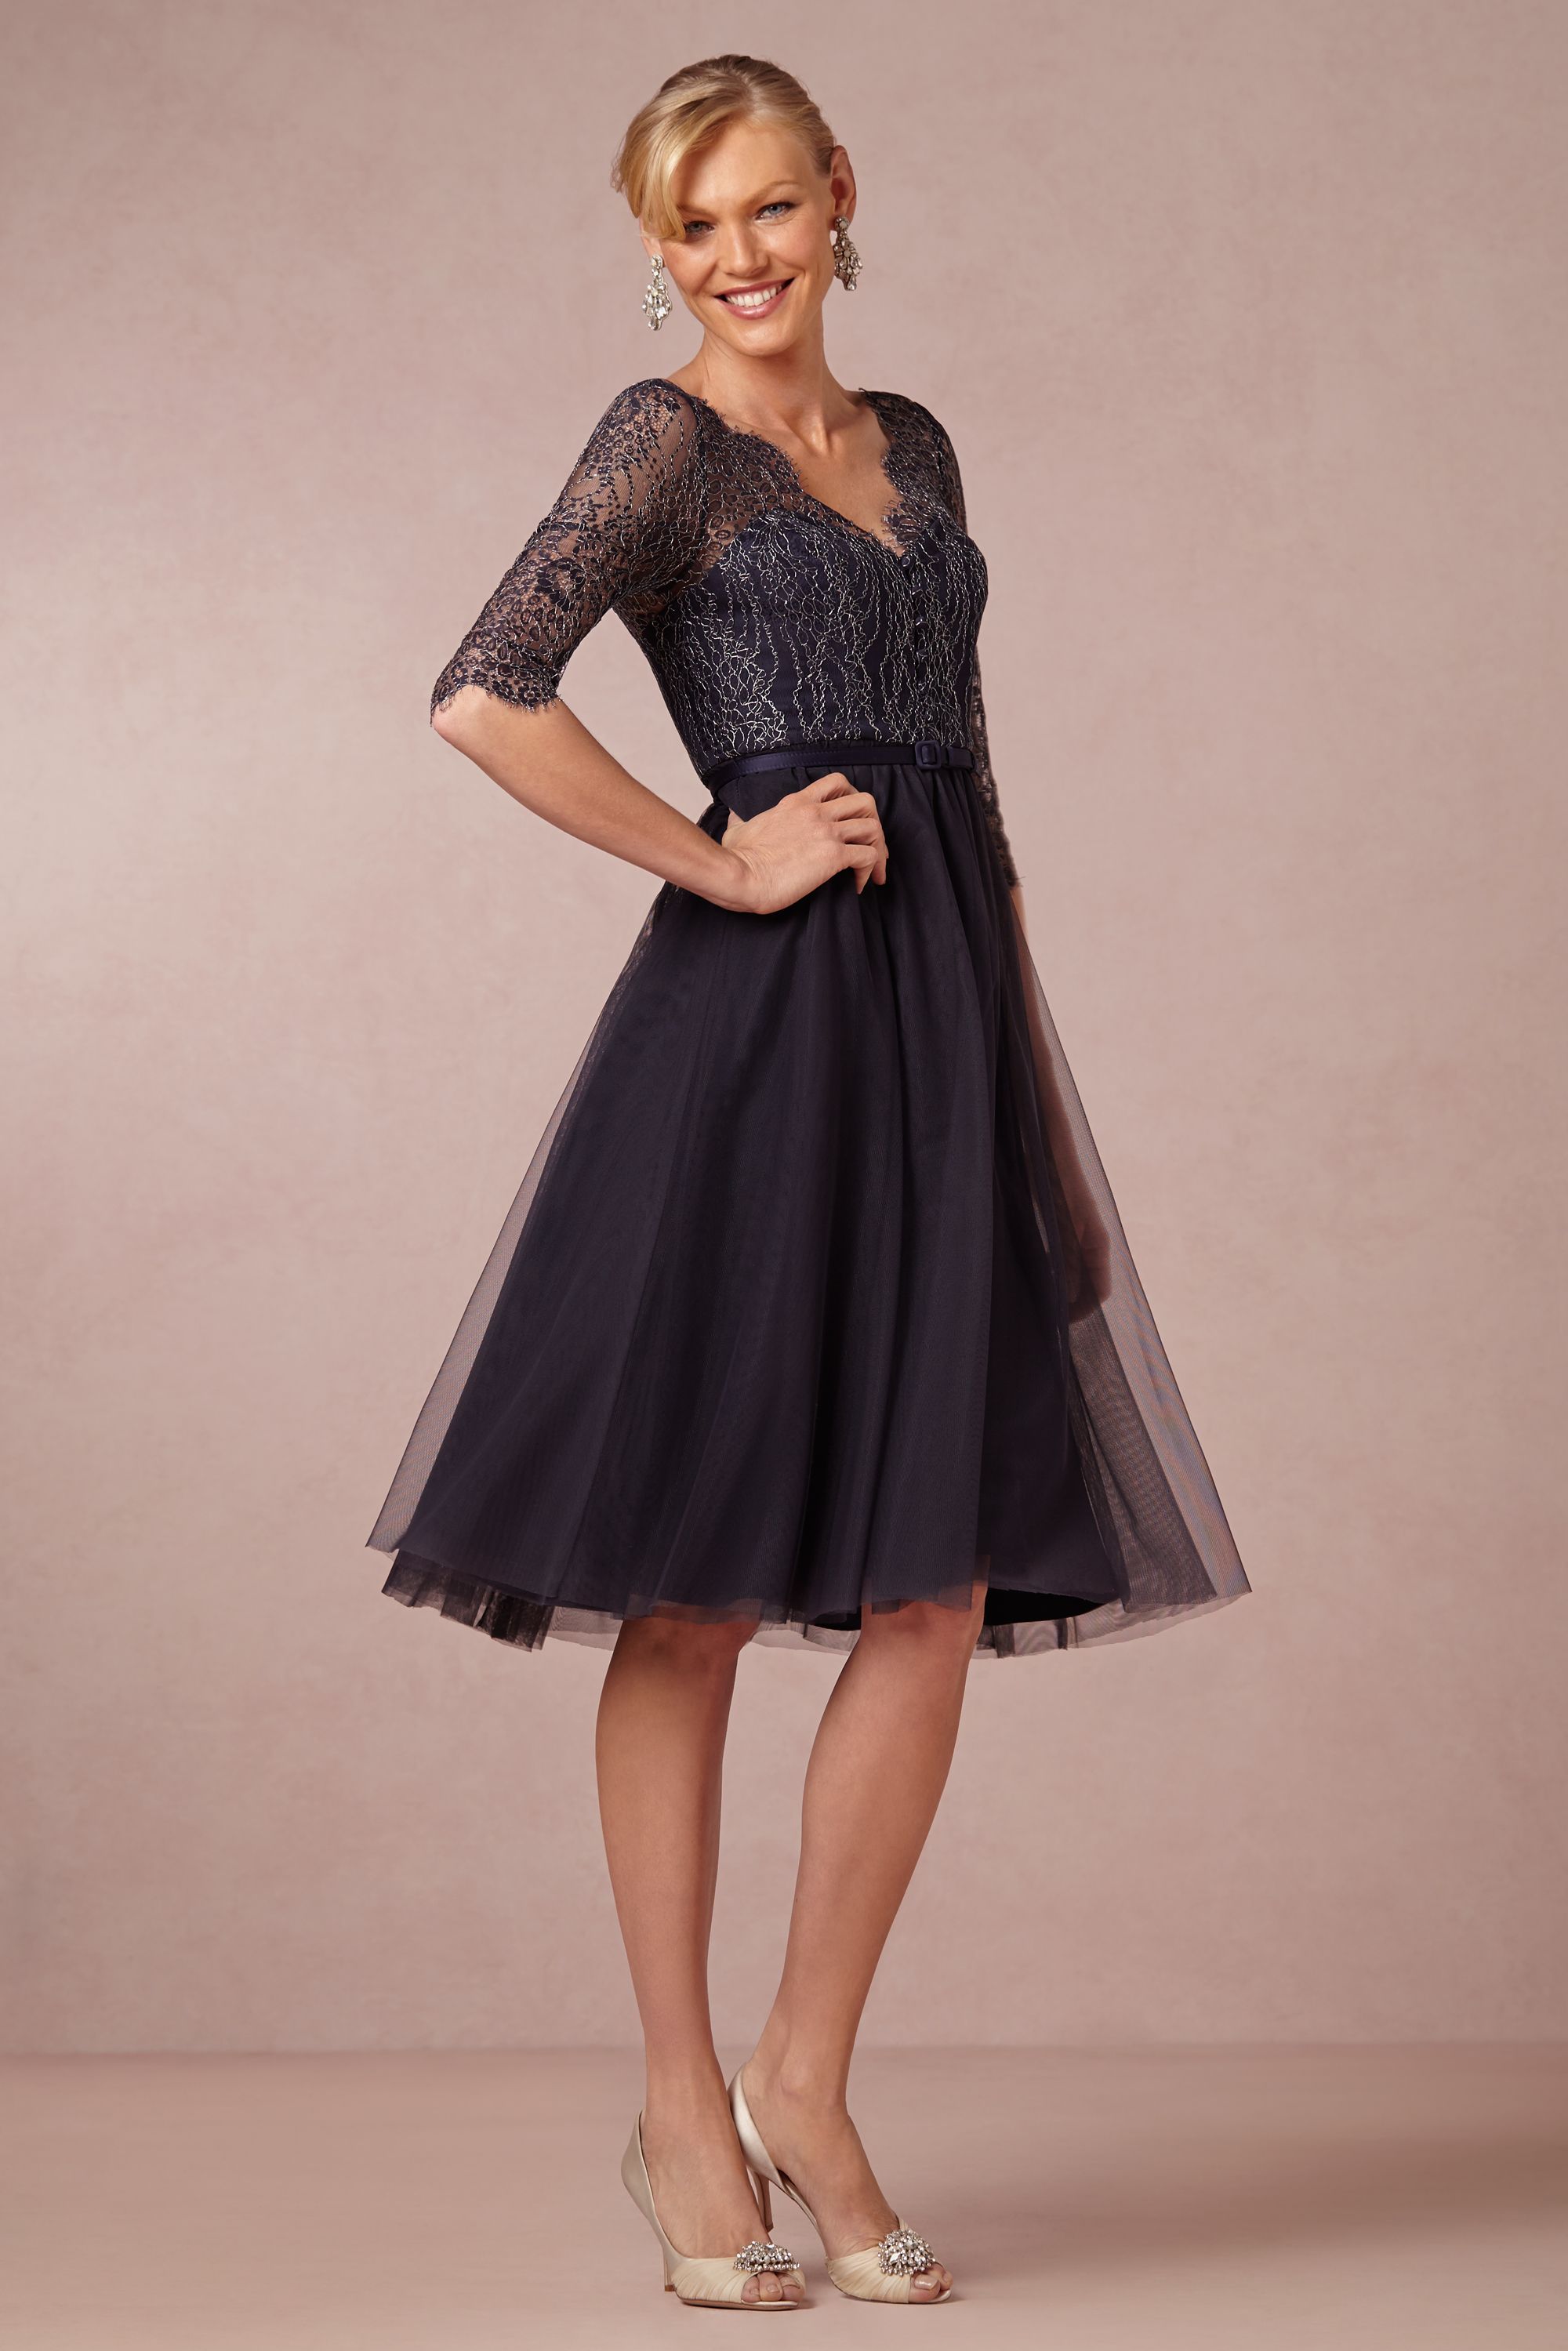 Sapphire Dress in Sale | BHLDN